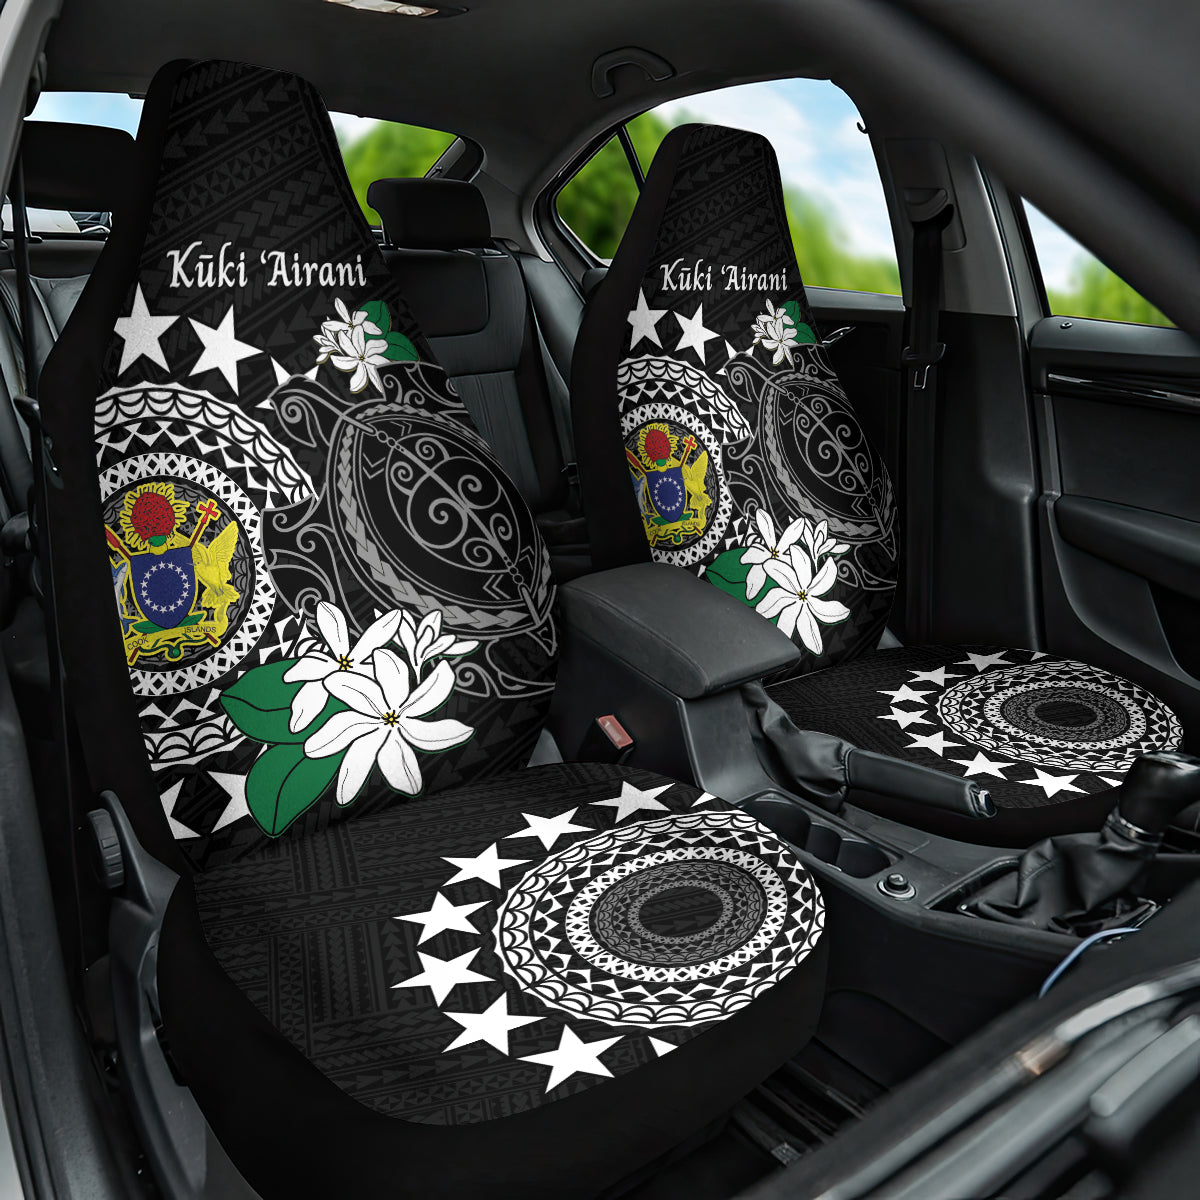 Cook Islands Independence Day Car Seat Cover Kuki Airani Tiare Maori Polynesian Pattern - Black